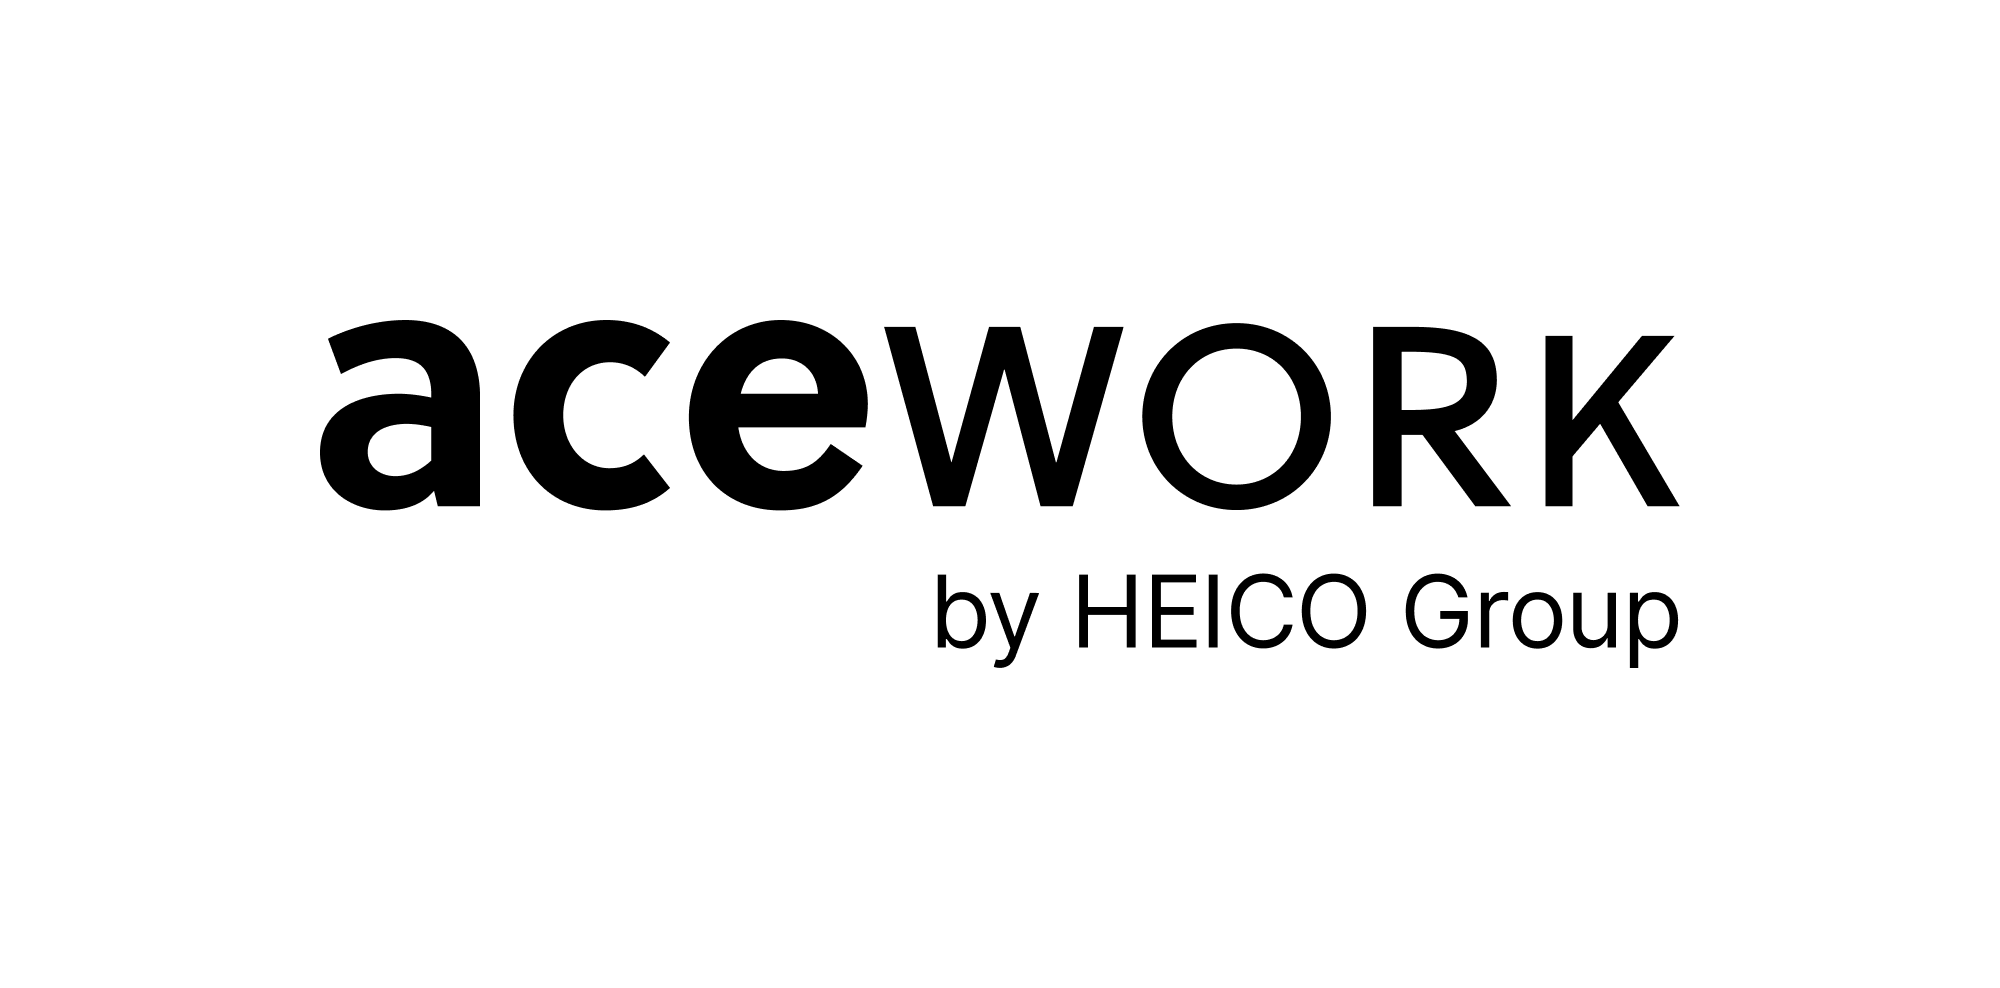 acework logo black